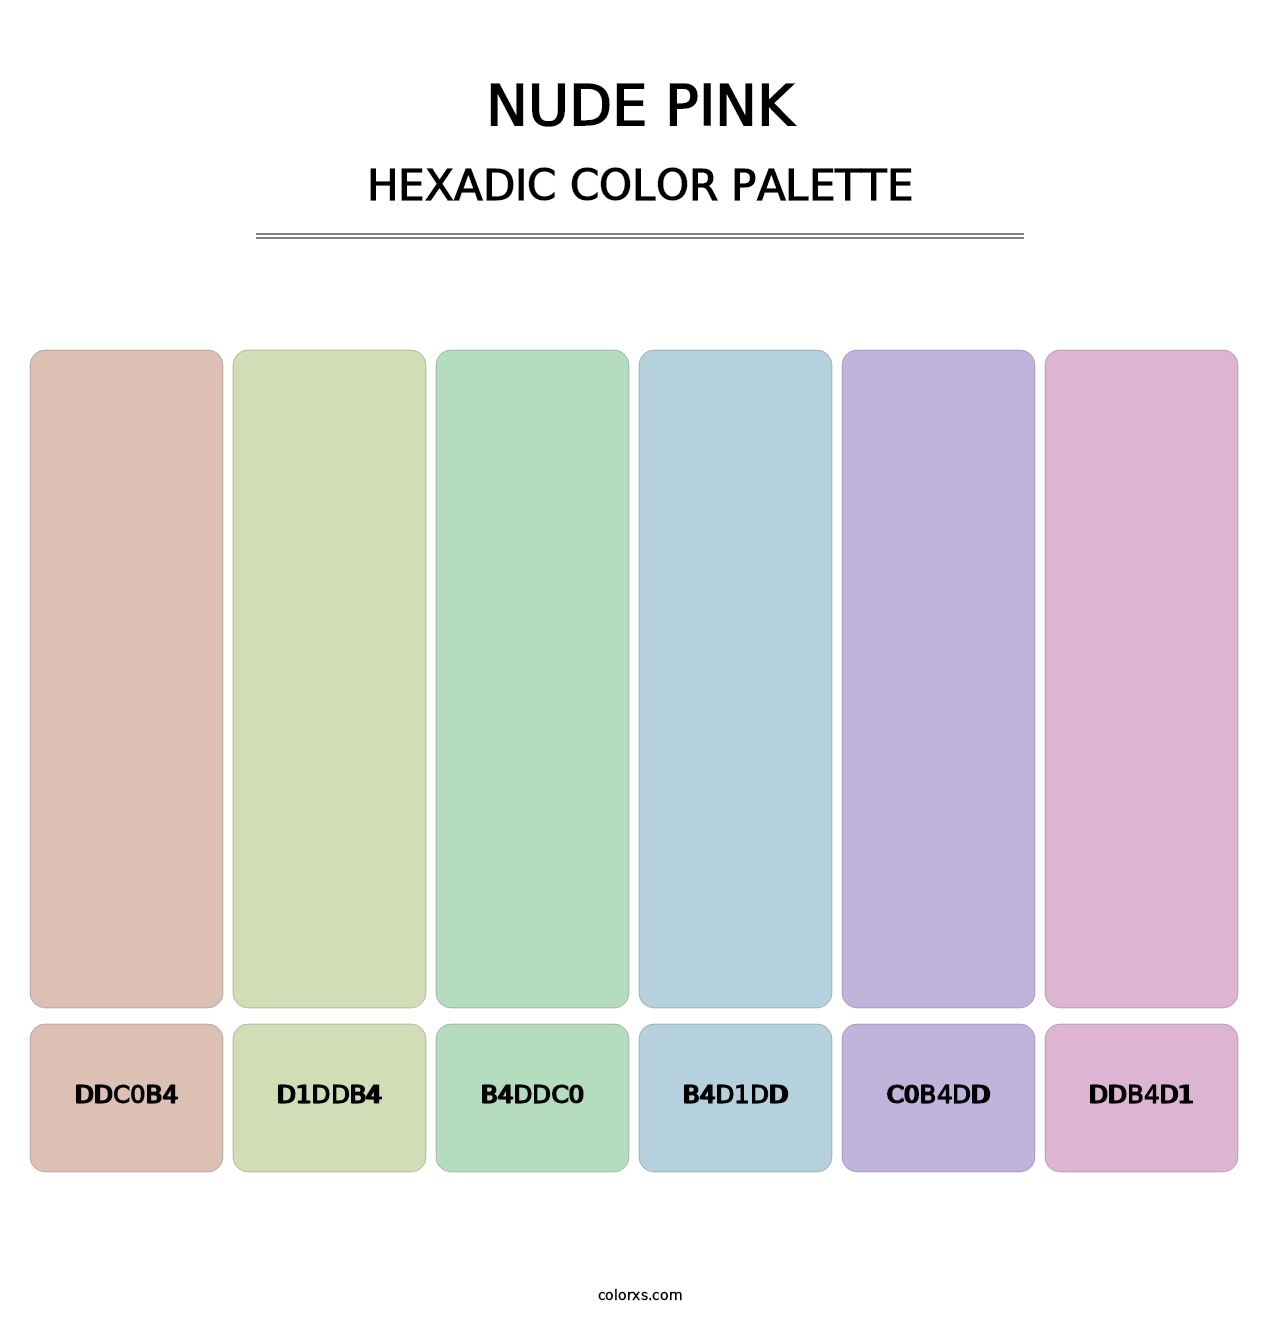 Nude Pink - Hexadic Color Palette